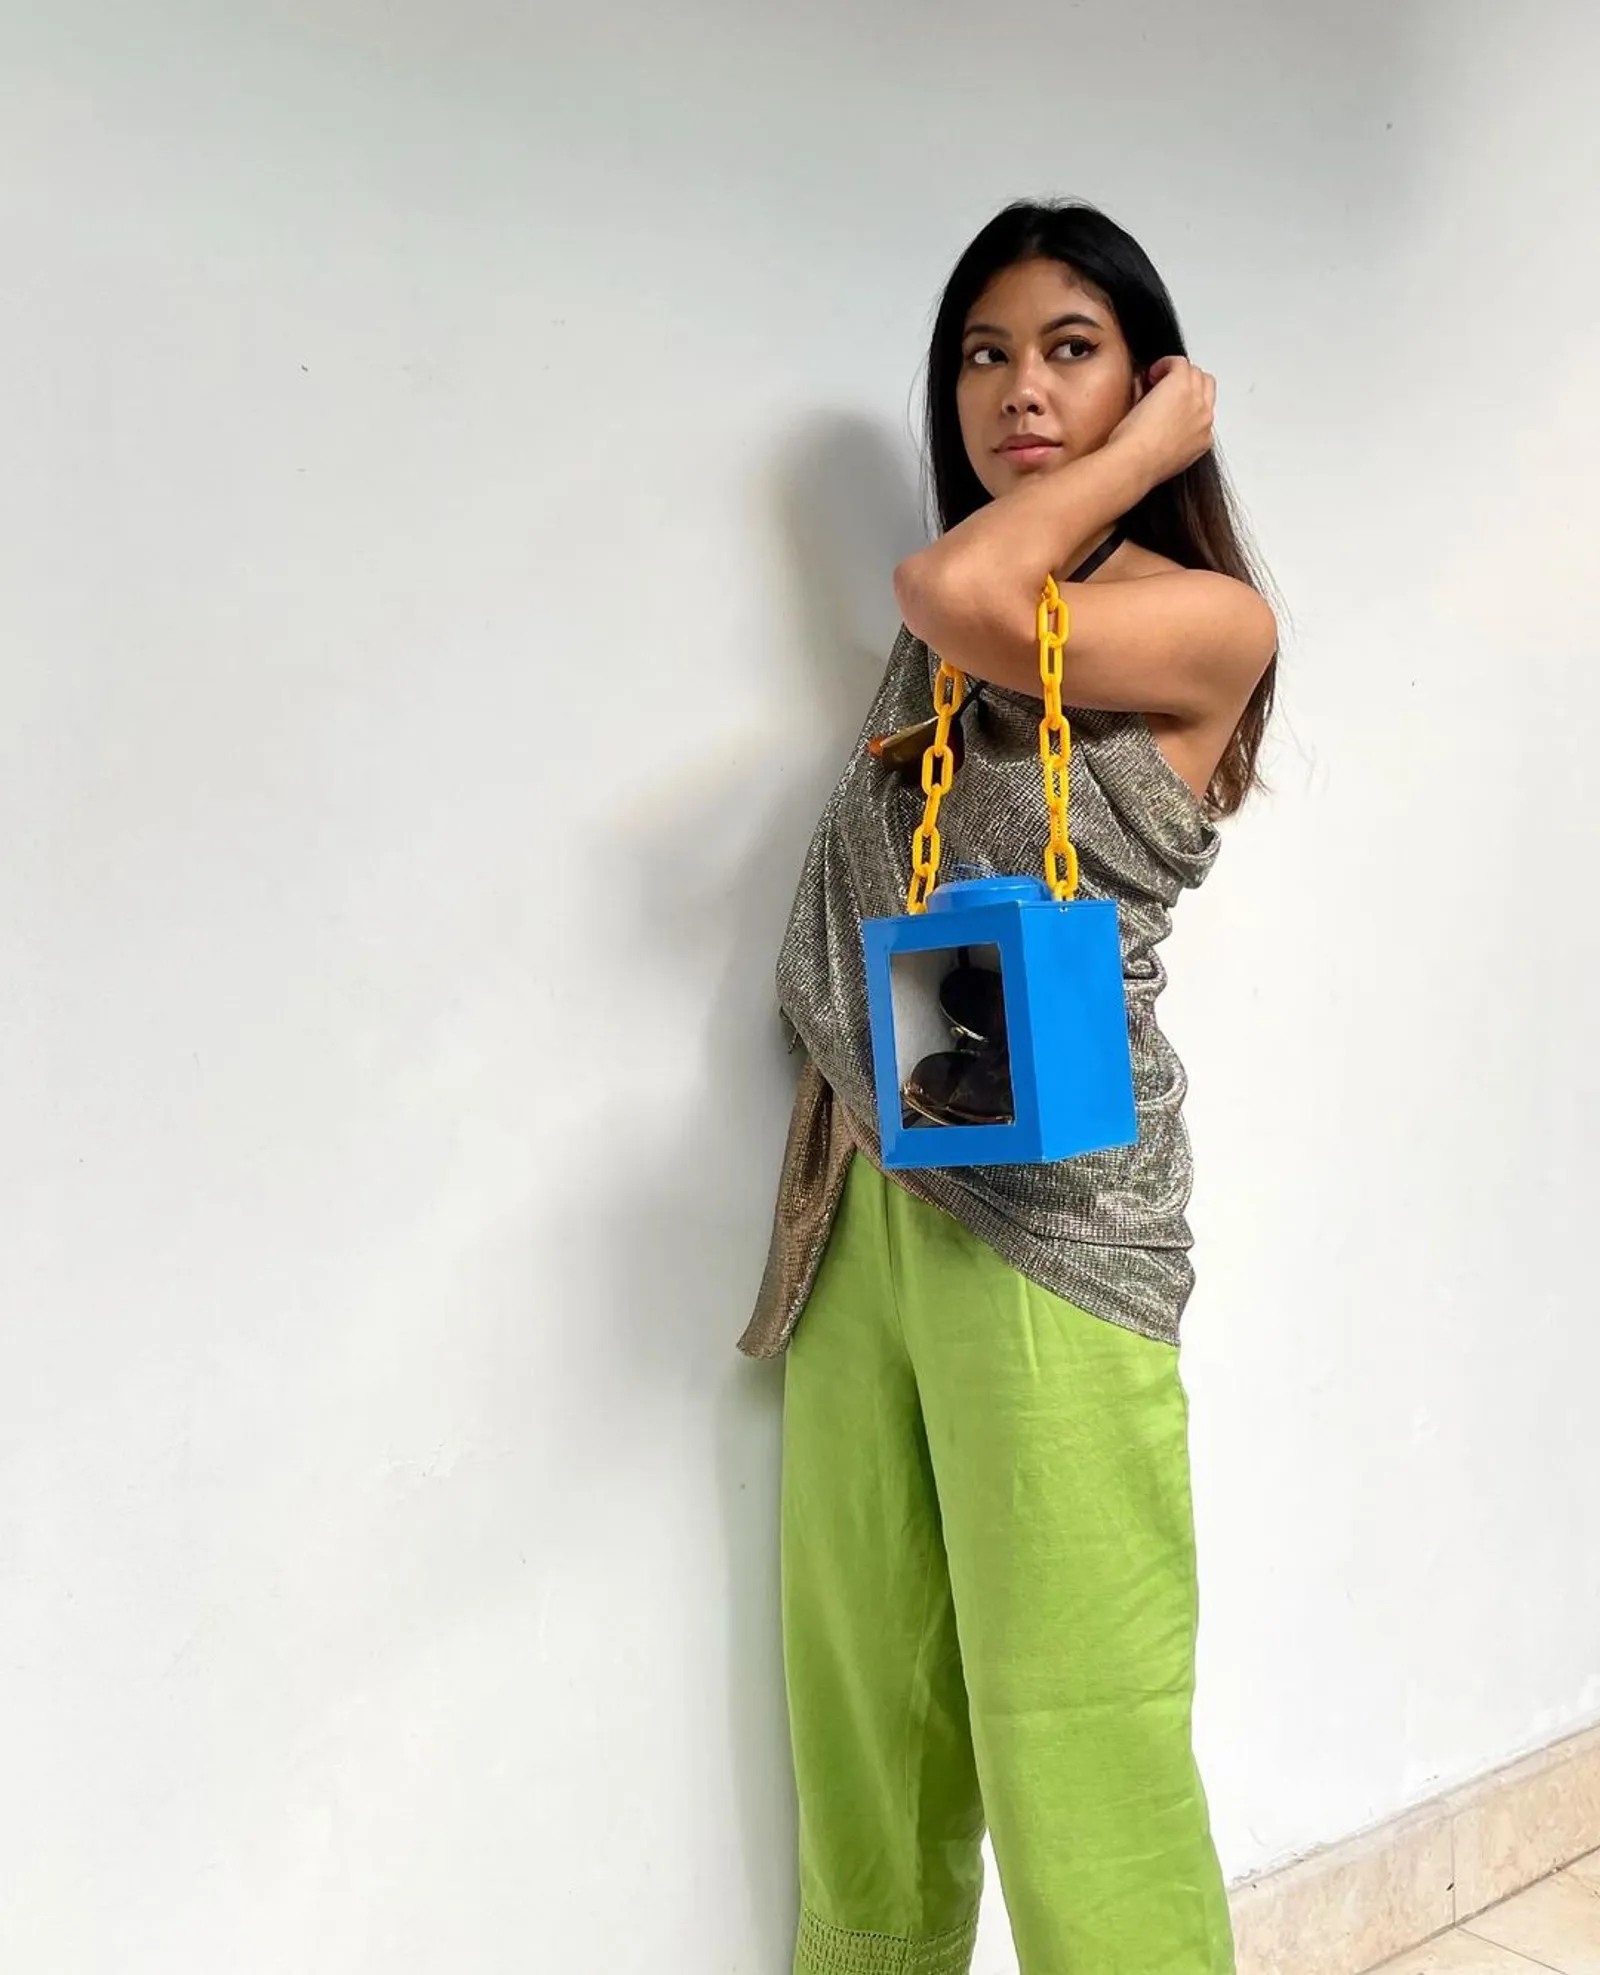 Ide Upcycling a La Putri Samboda, Sulap Barang Bekas Jadi Fashion Item